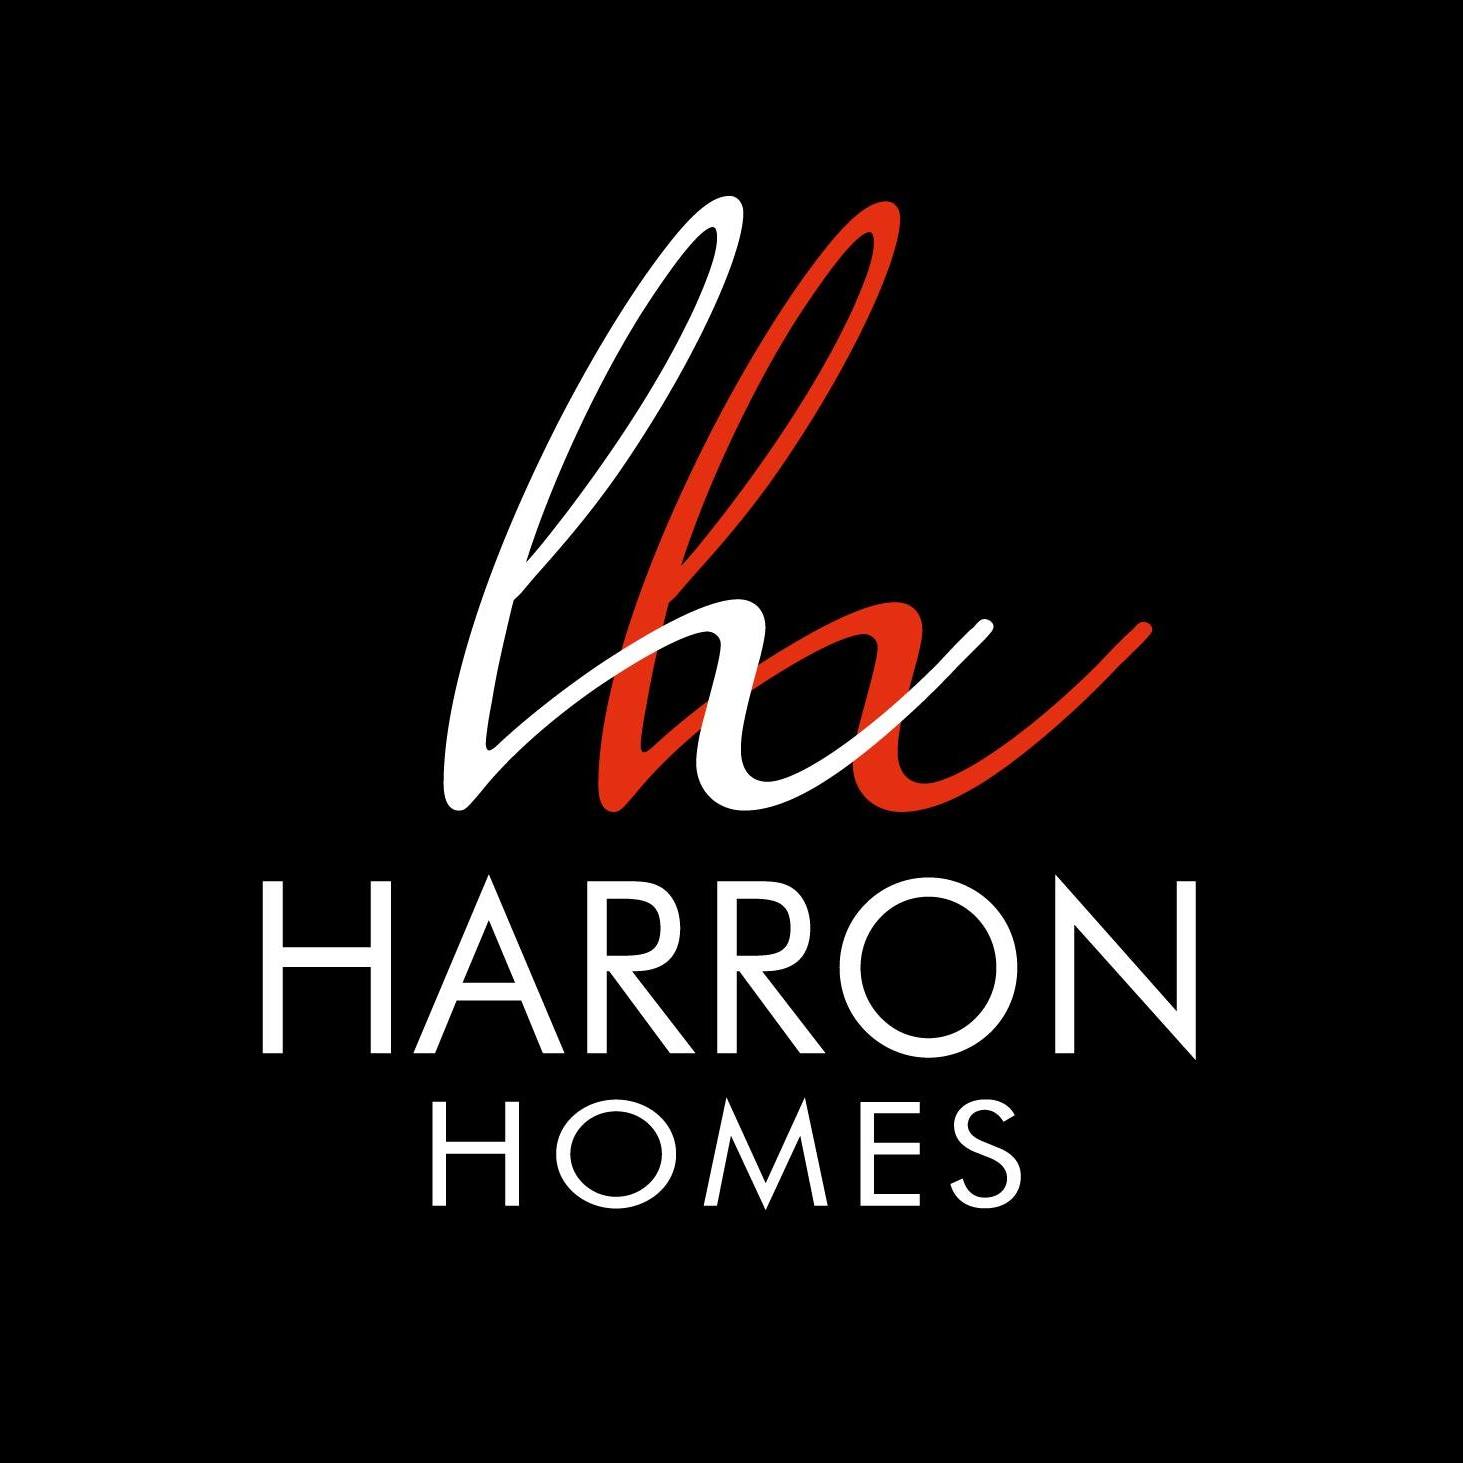 Harron Homes